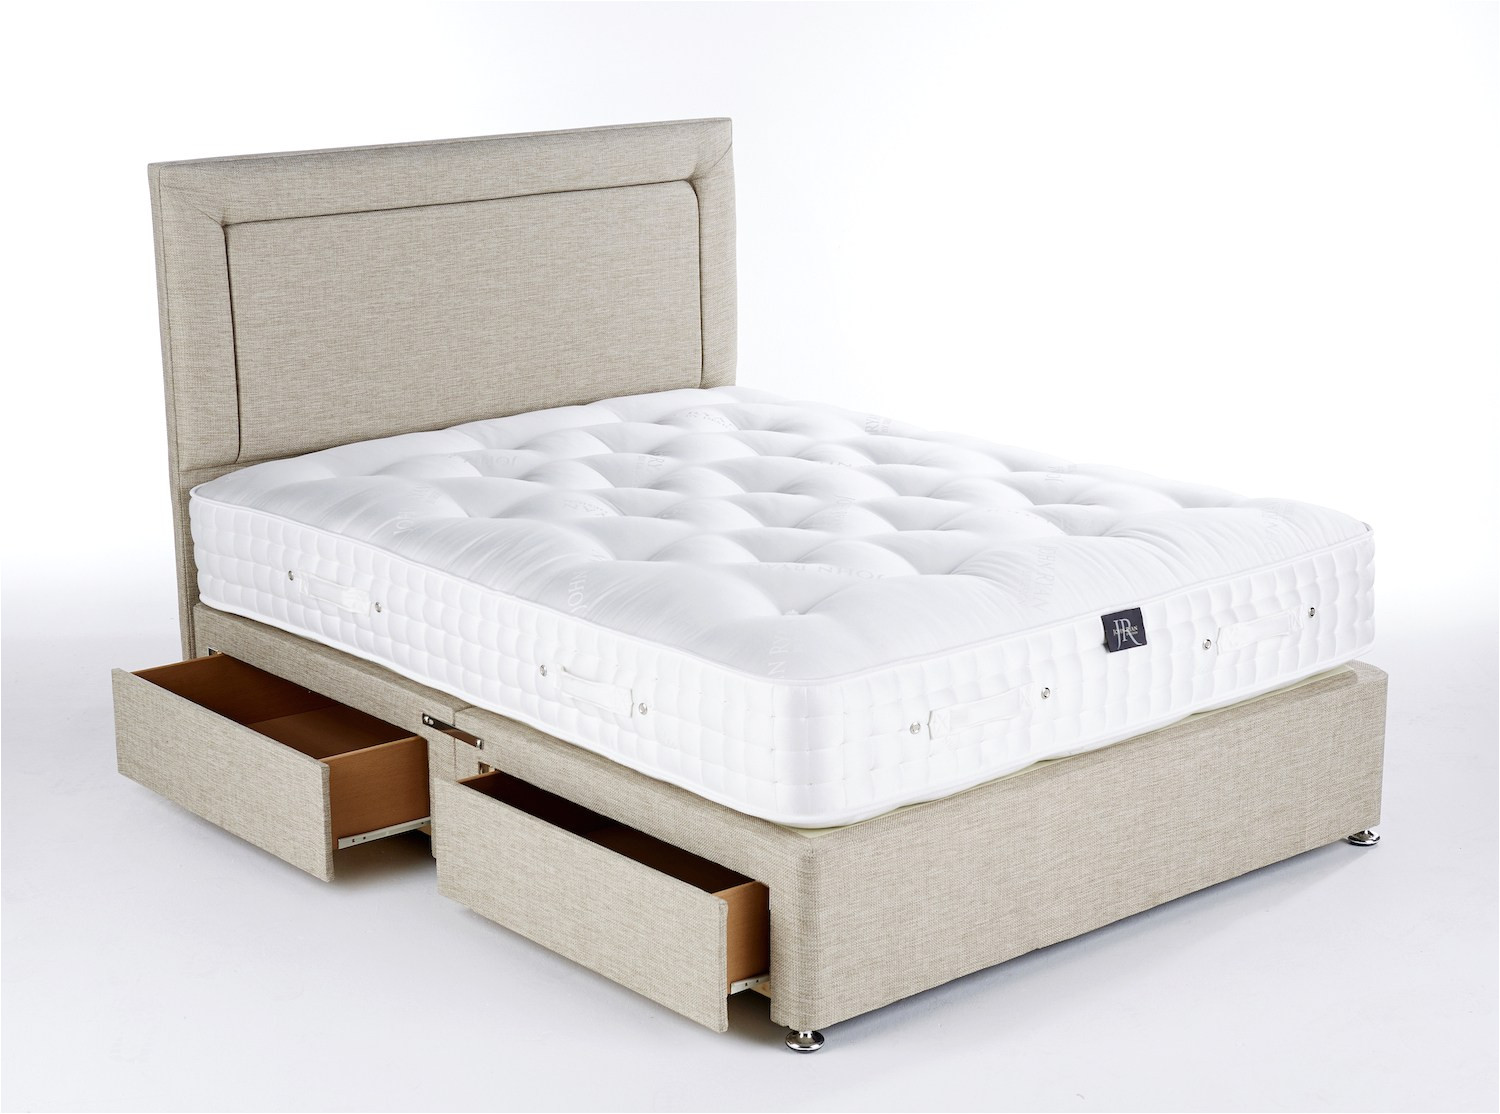 ikea firm memory foam mattress review